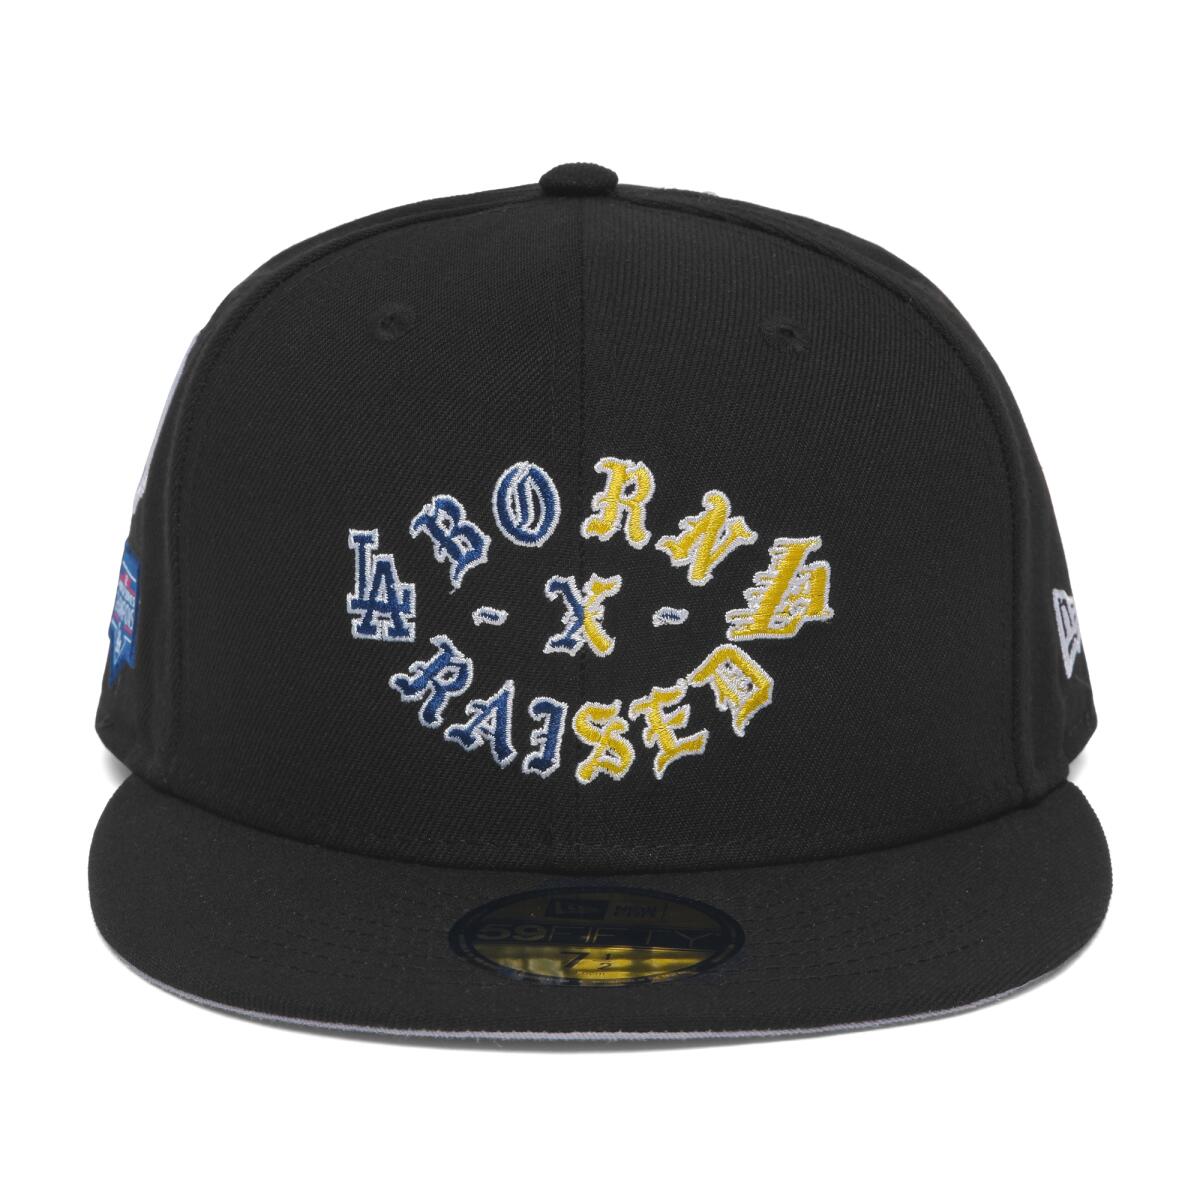 Born X Raised City of Champions New Era hat